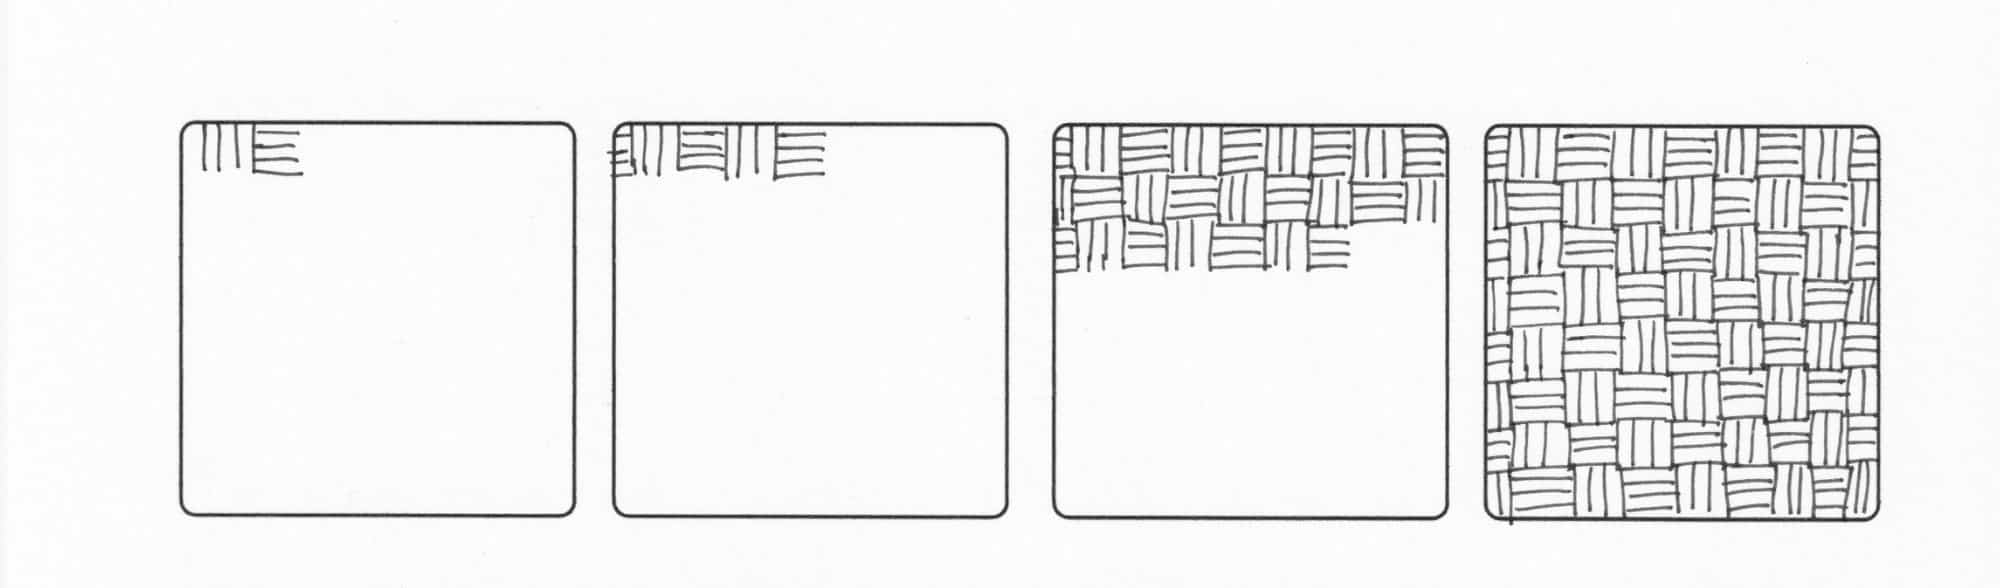 4 zentangle basket weave patterns printable sheet with black pen on pink table